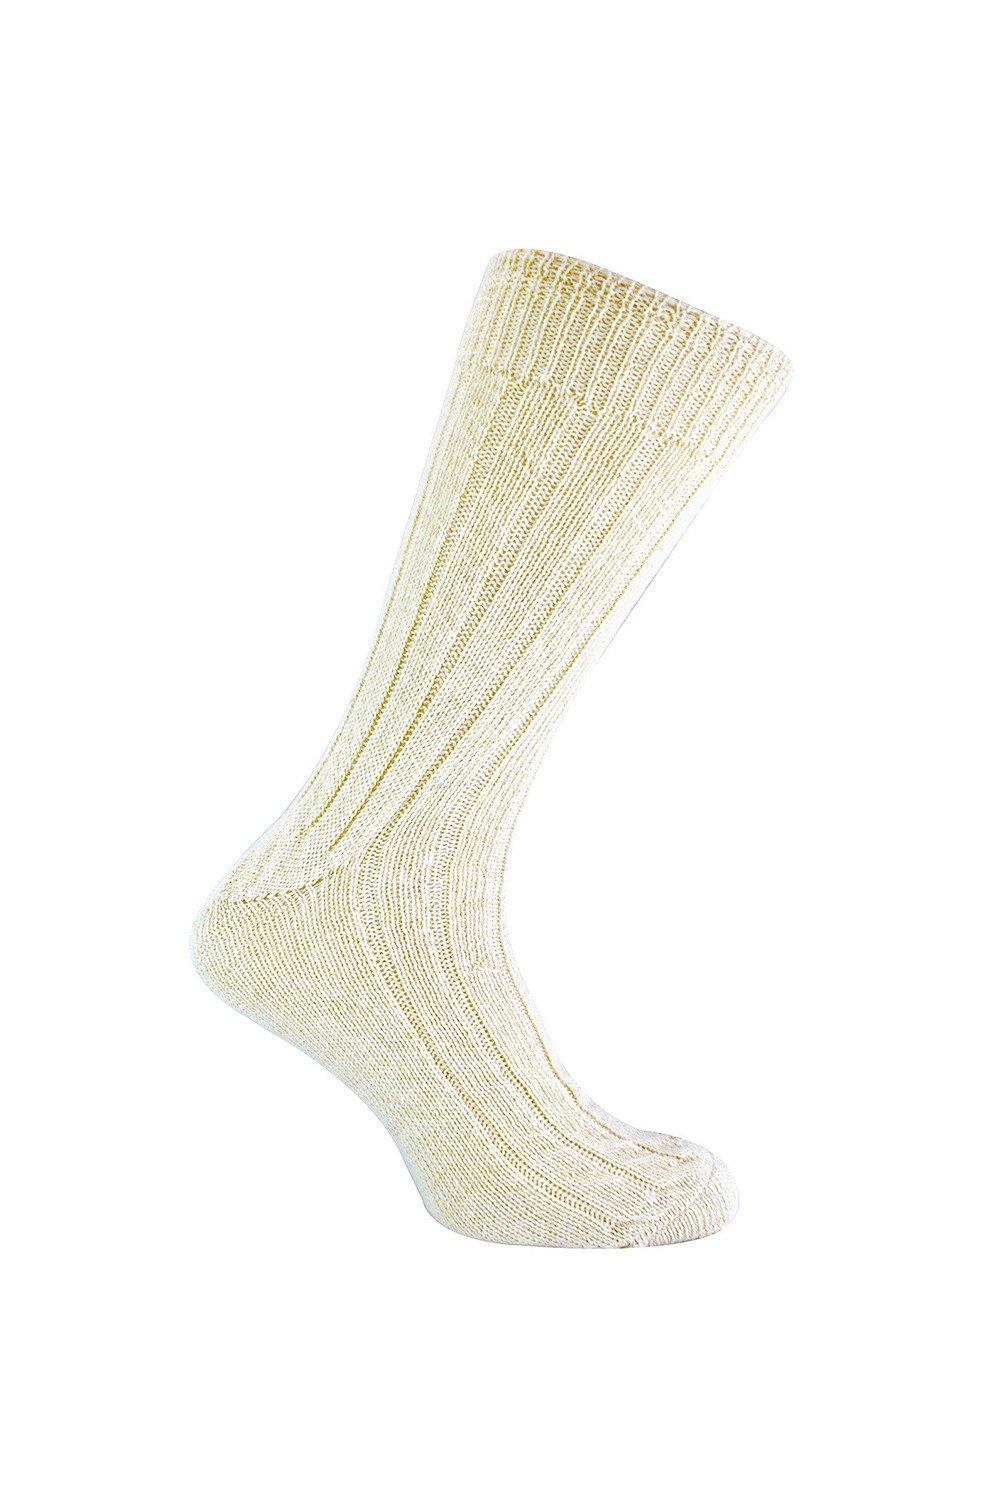 90% Alpaca Wool Thick Soft Warm Luxury Bed Socks